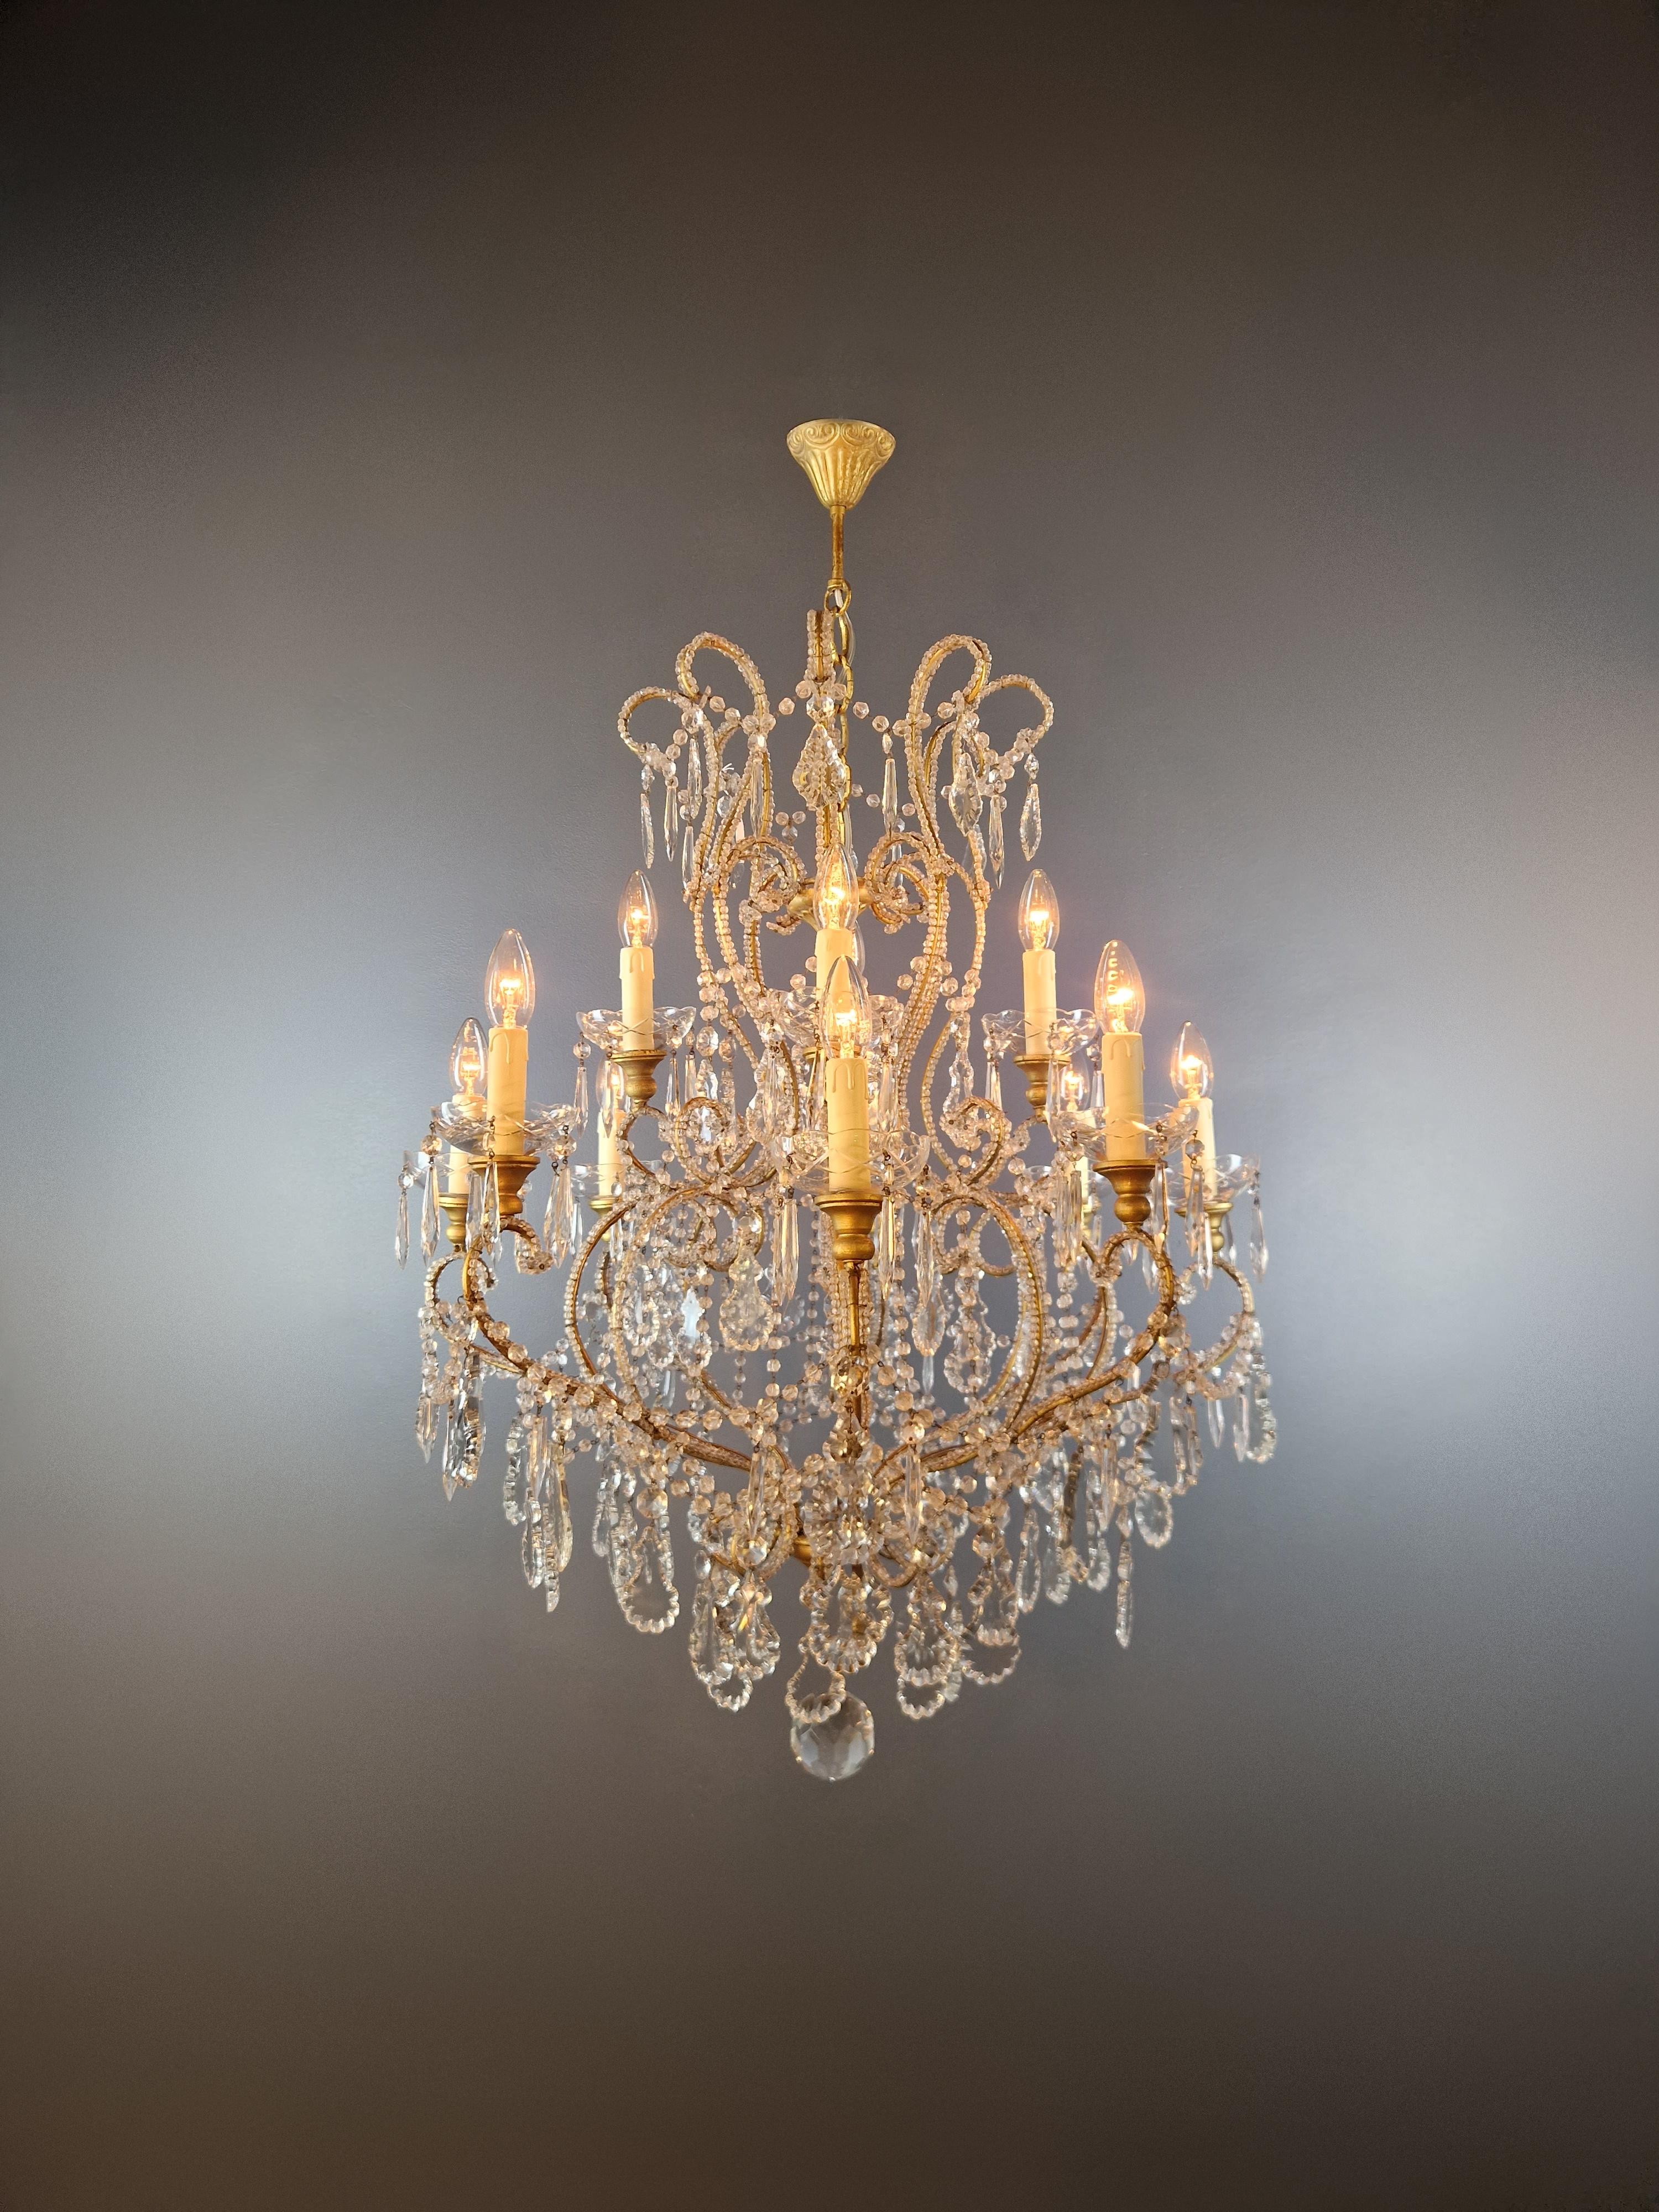 Bentwood Brass Crystal Chandelier Antique Ceiling Lamp Lustre Art Nouveau Lamp For Sale